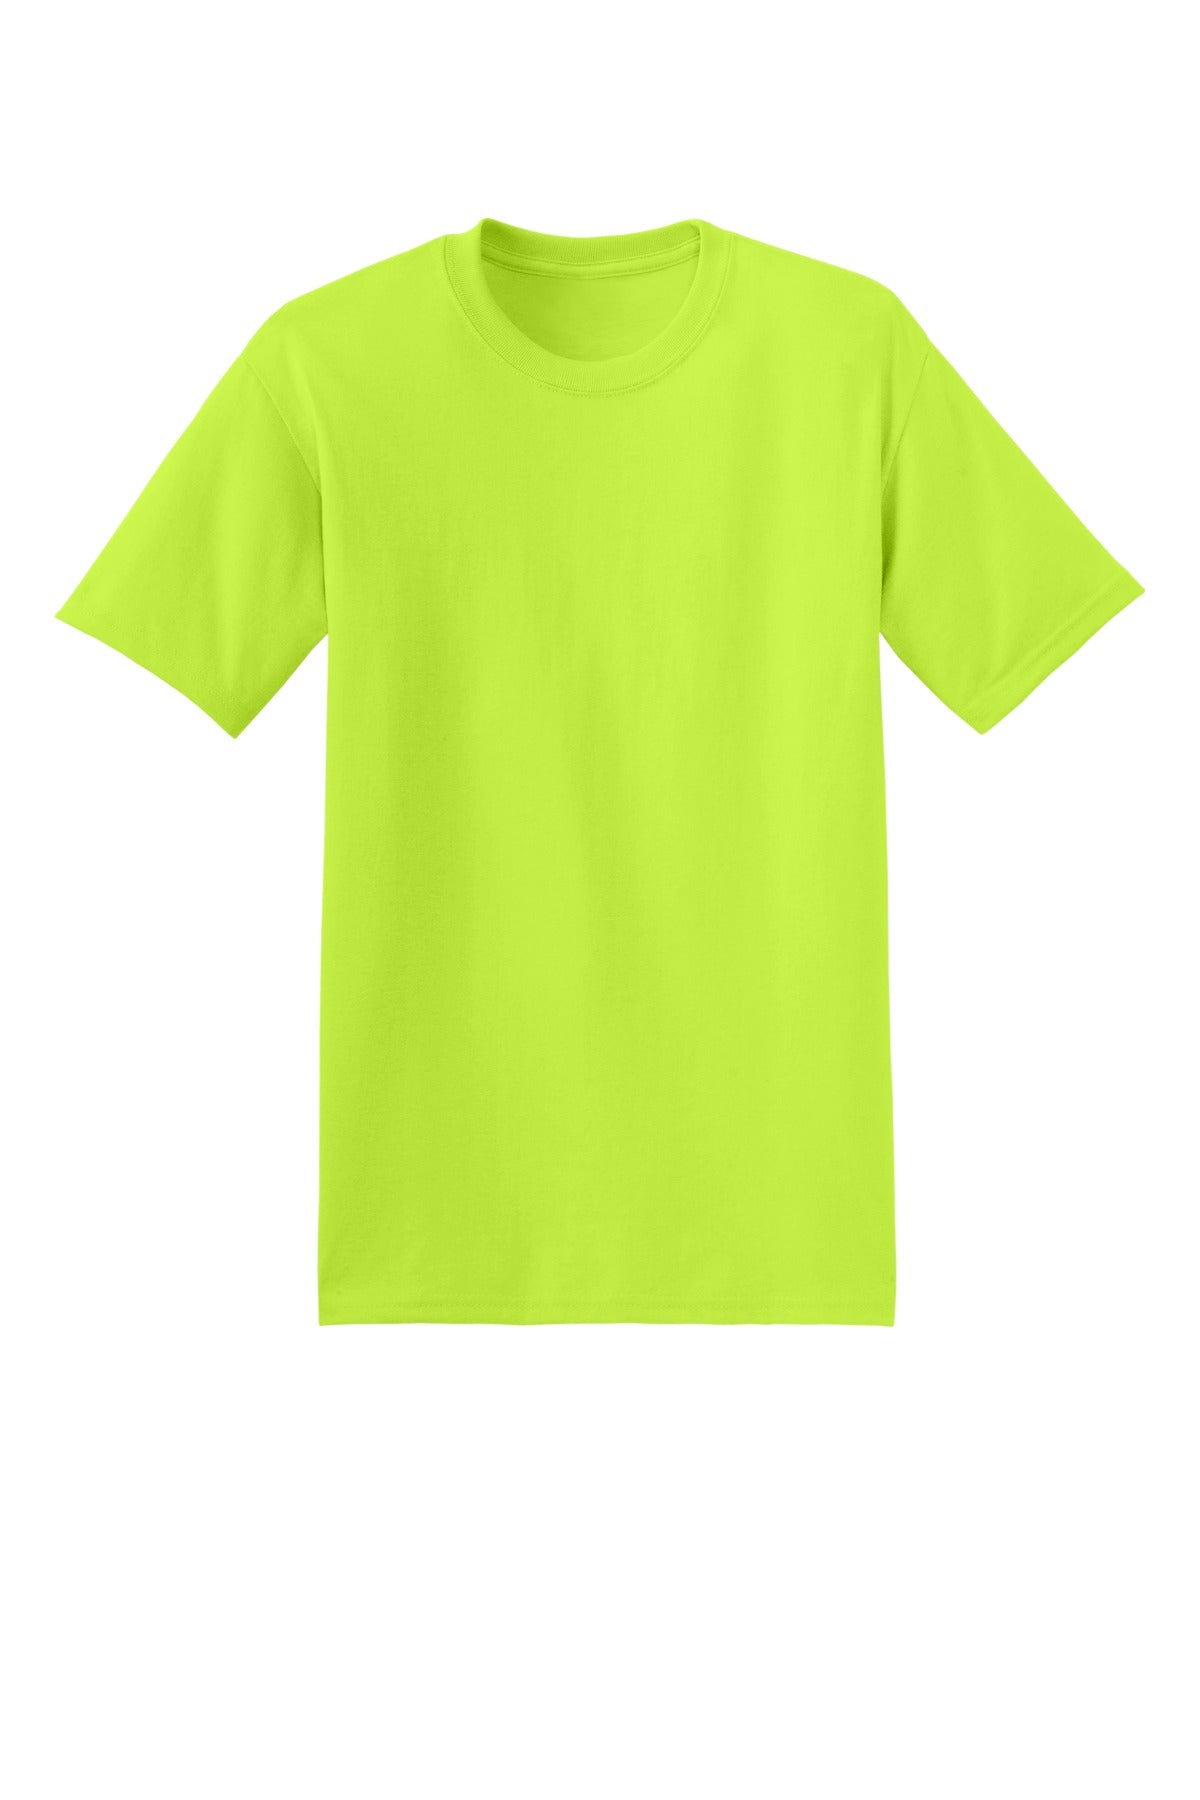 Hanes - EcoSmart 50/50 Cotton/Poly T-Shirt. 5170